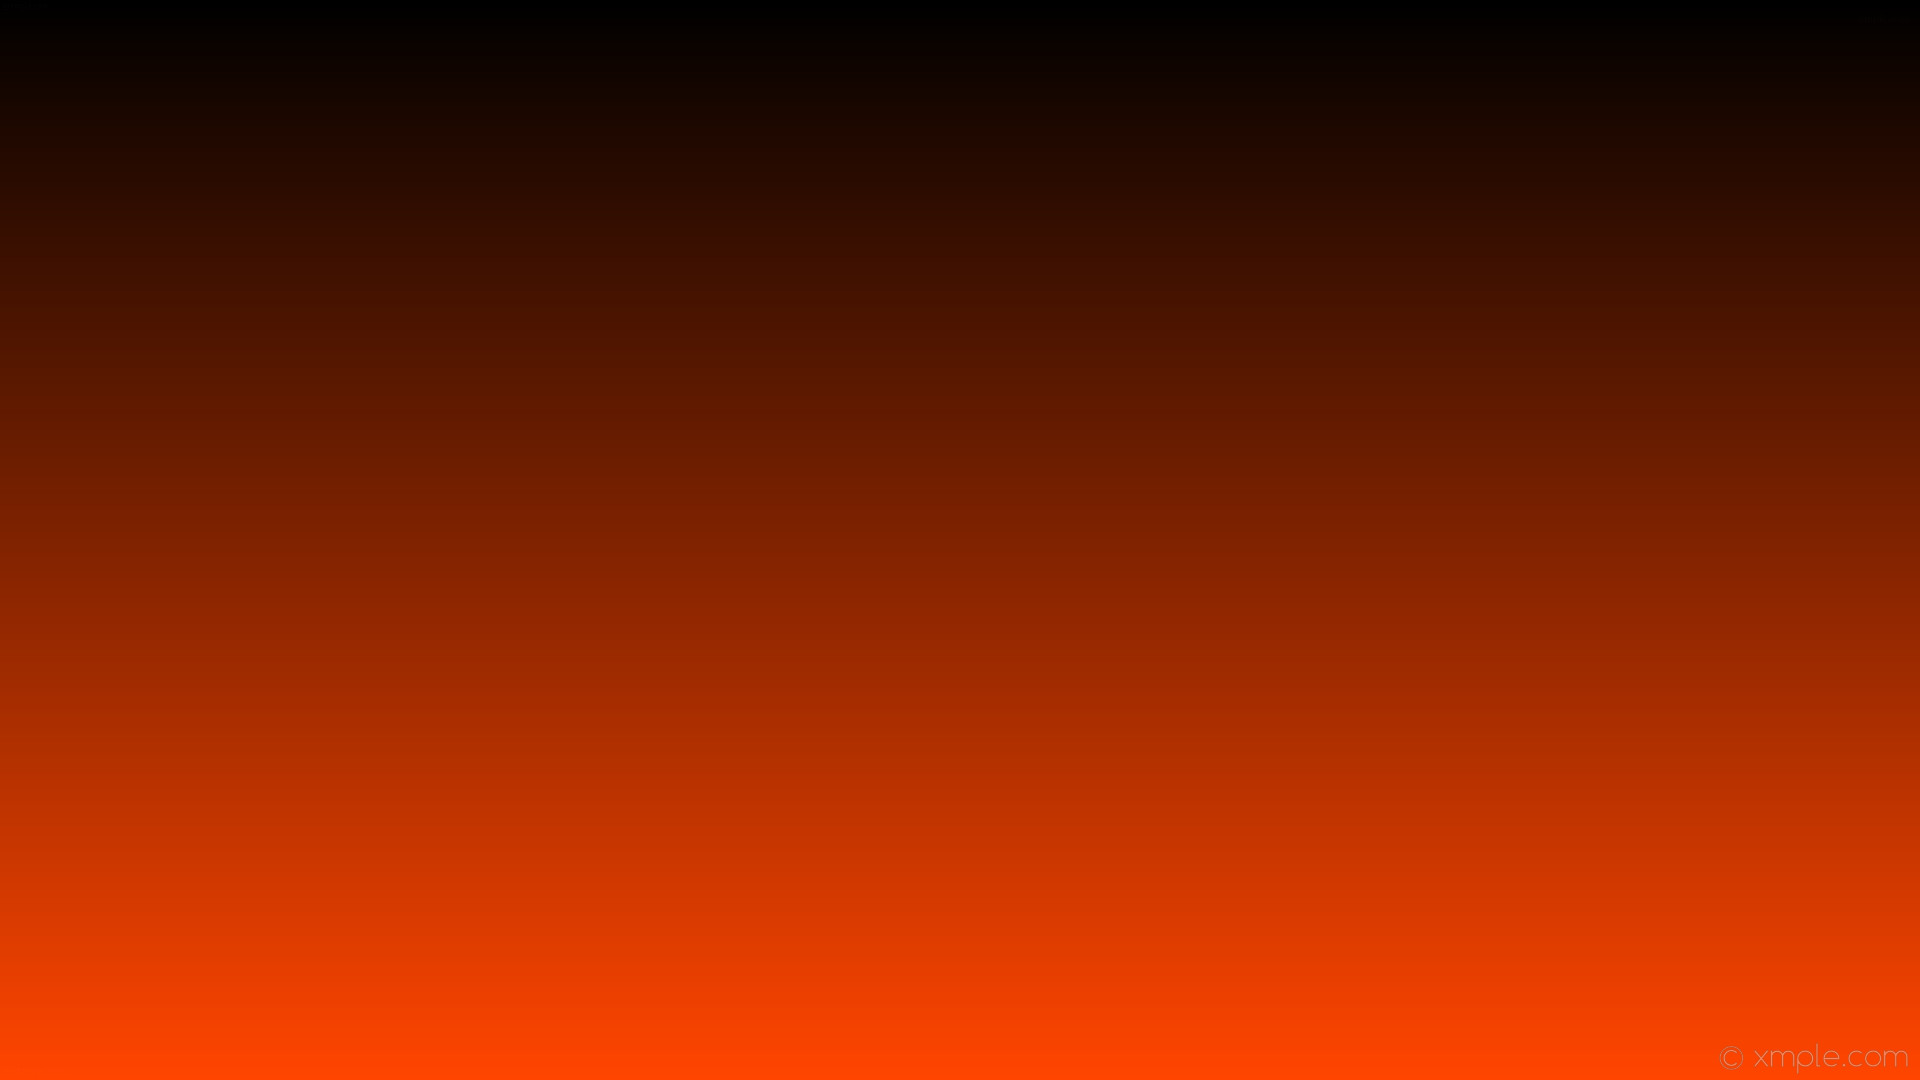 1920x1080 wallpaper linear gradient orange black orangered #ff4500 #000000 270Â°